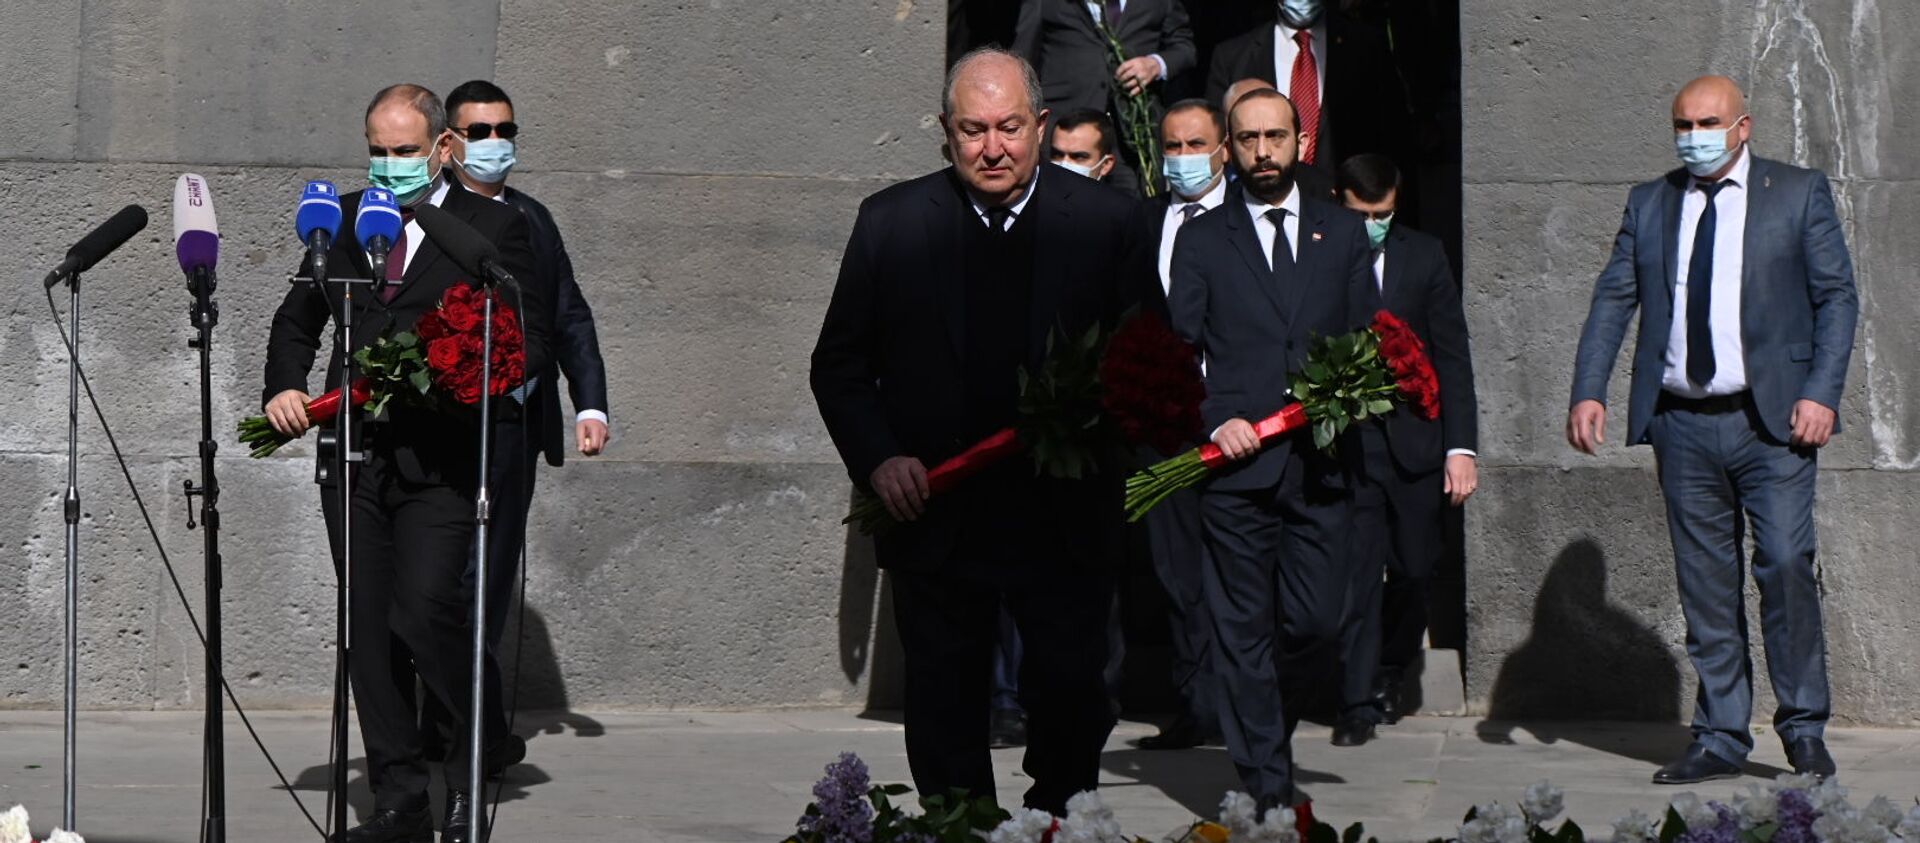 Армен Саркисян посетил мемориальный комплекс Цицернакаберд (24 апреля 2021). Ереван - Sputnik Армения, 1920, 30.04.2021